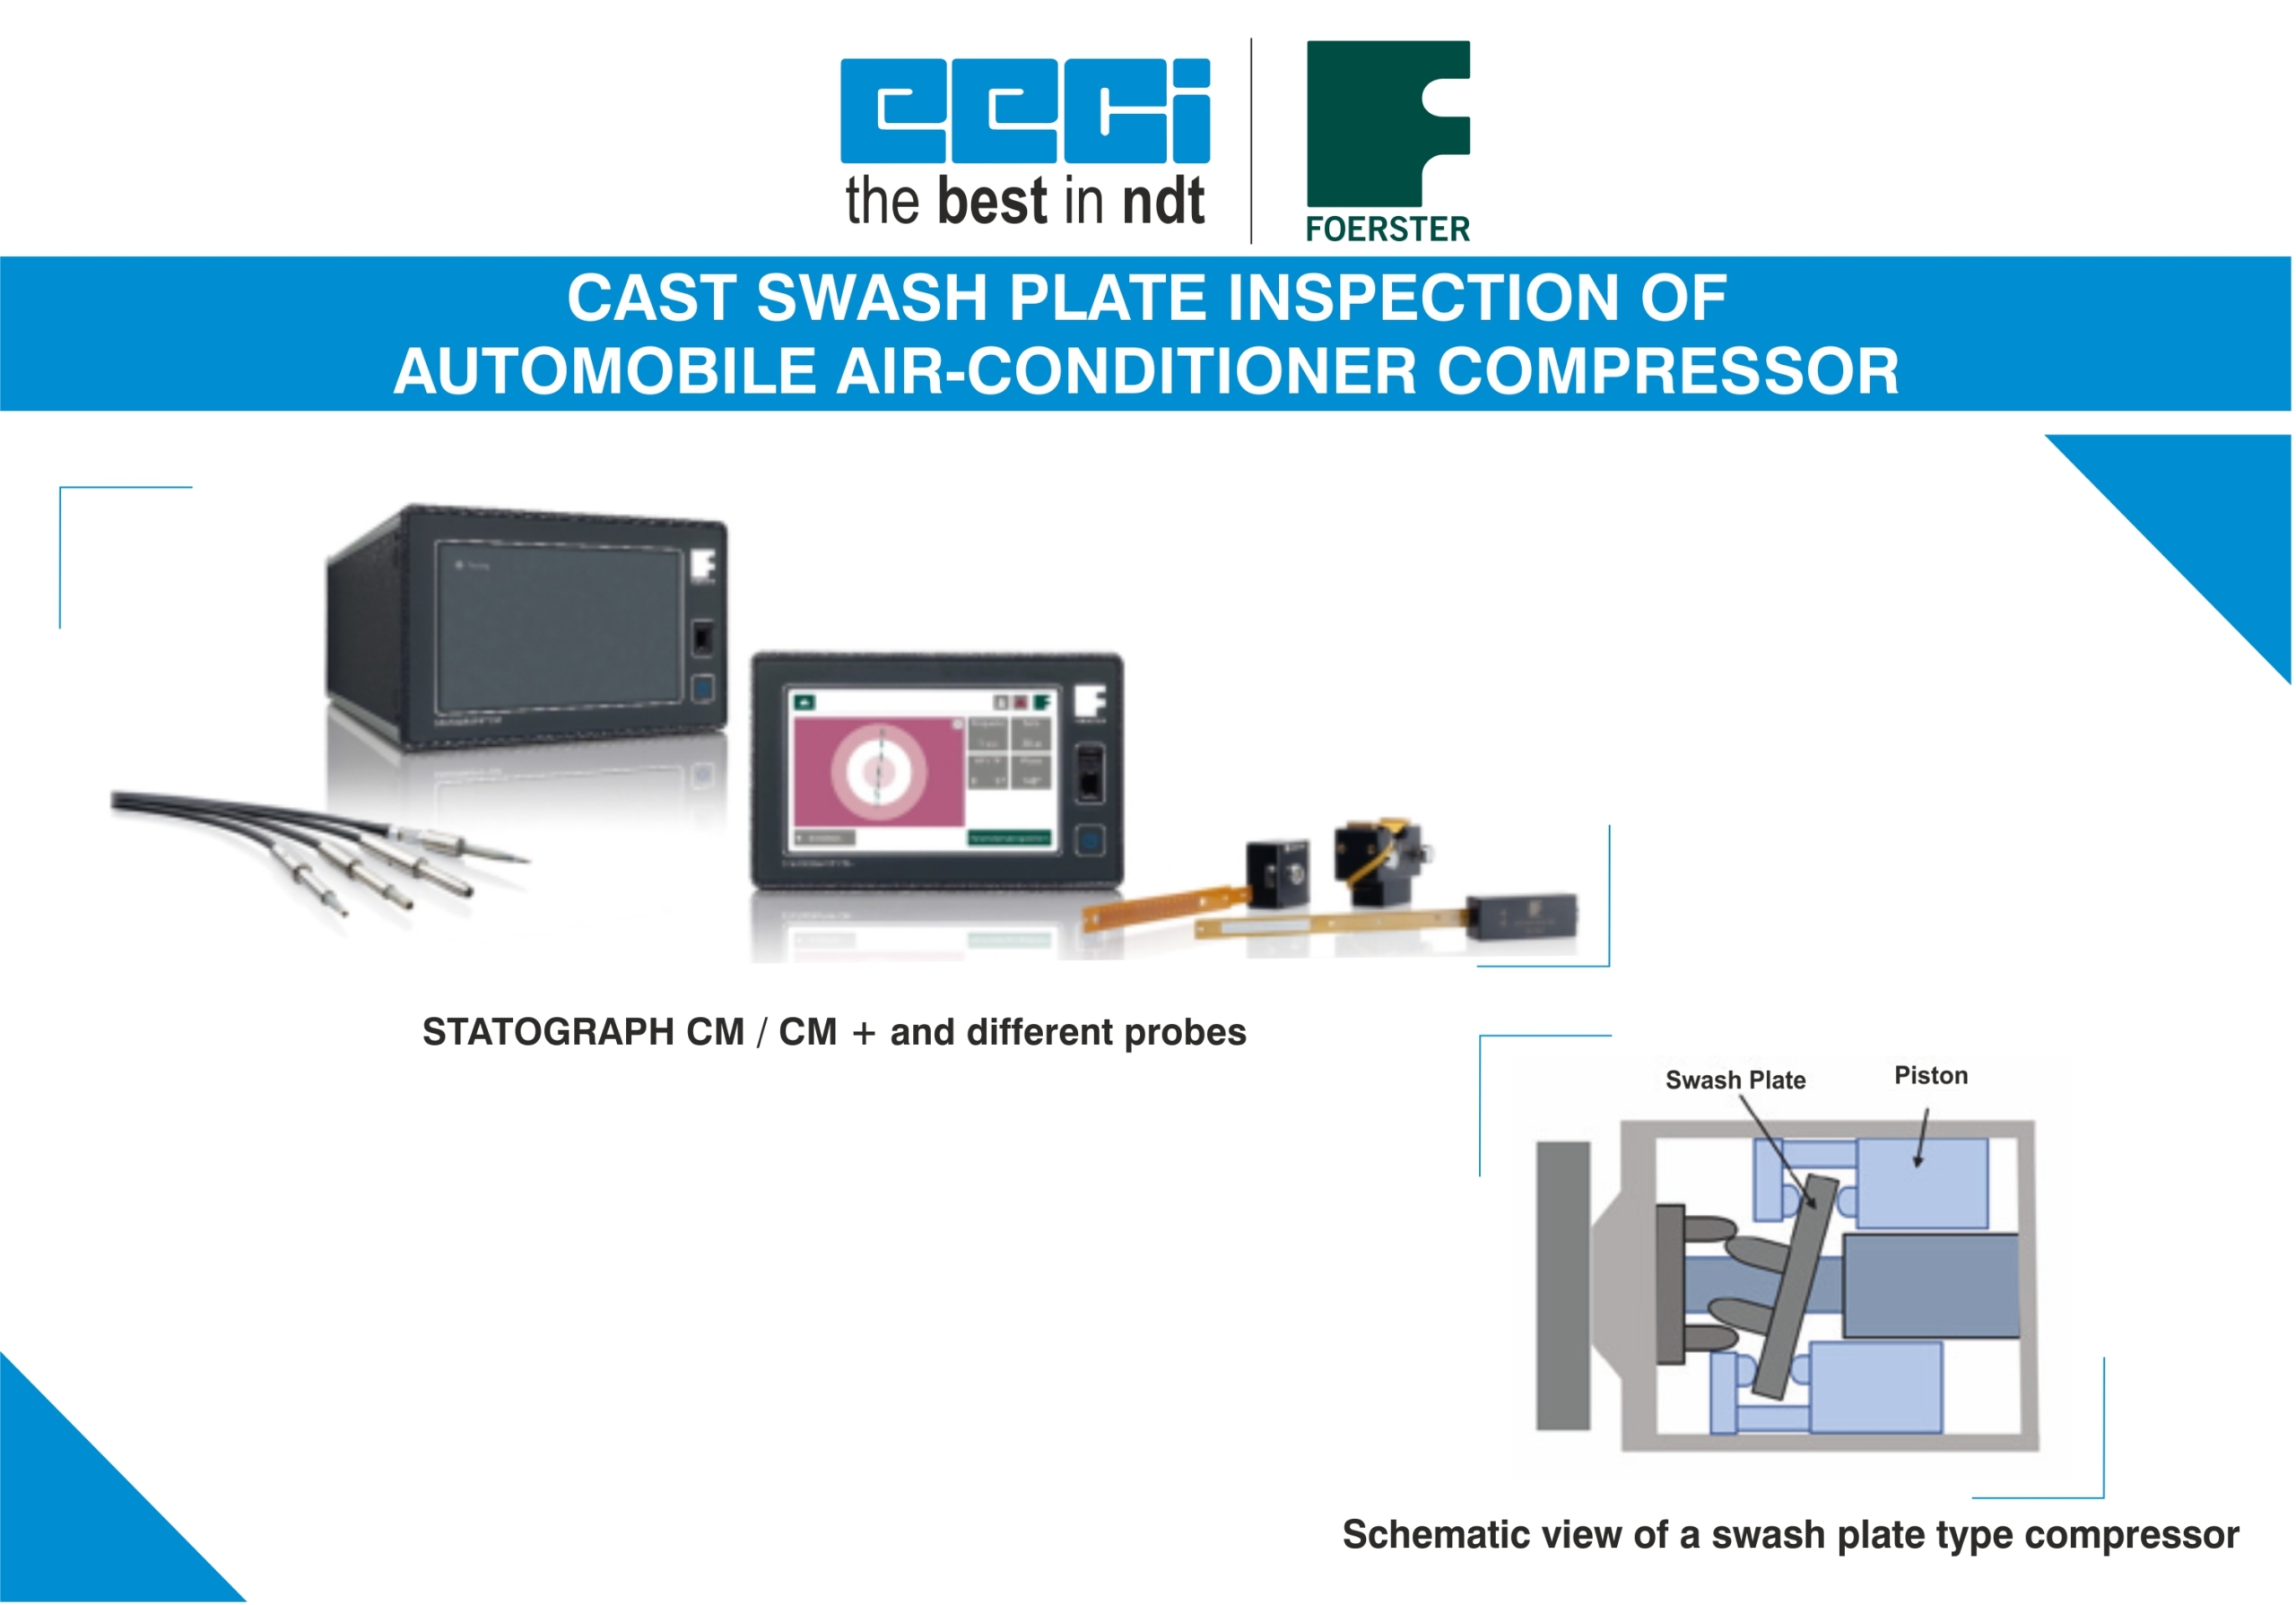 CAST SWASH PLATE INSPECTION OF AUTOMOBILE AIR-CONDITIONER COMPRESSOR